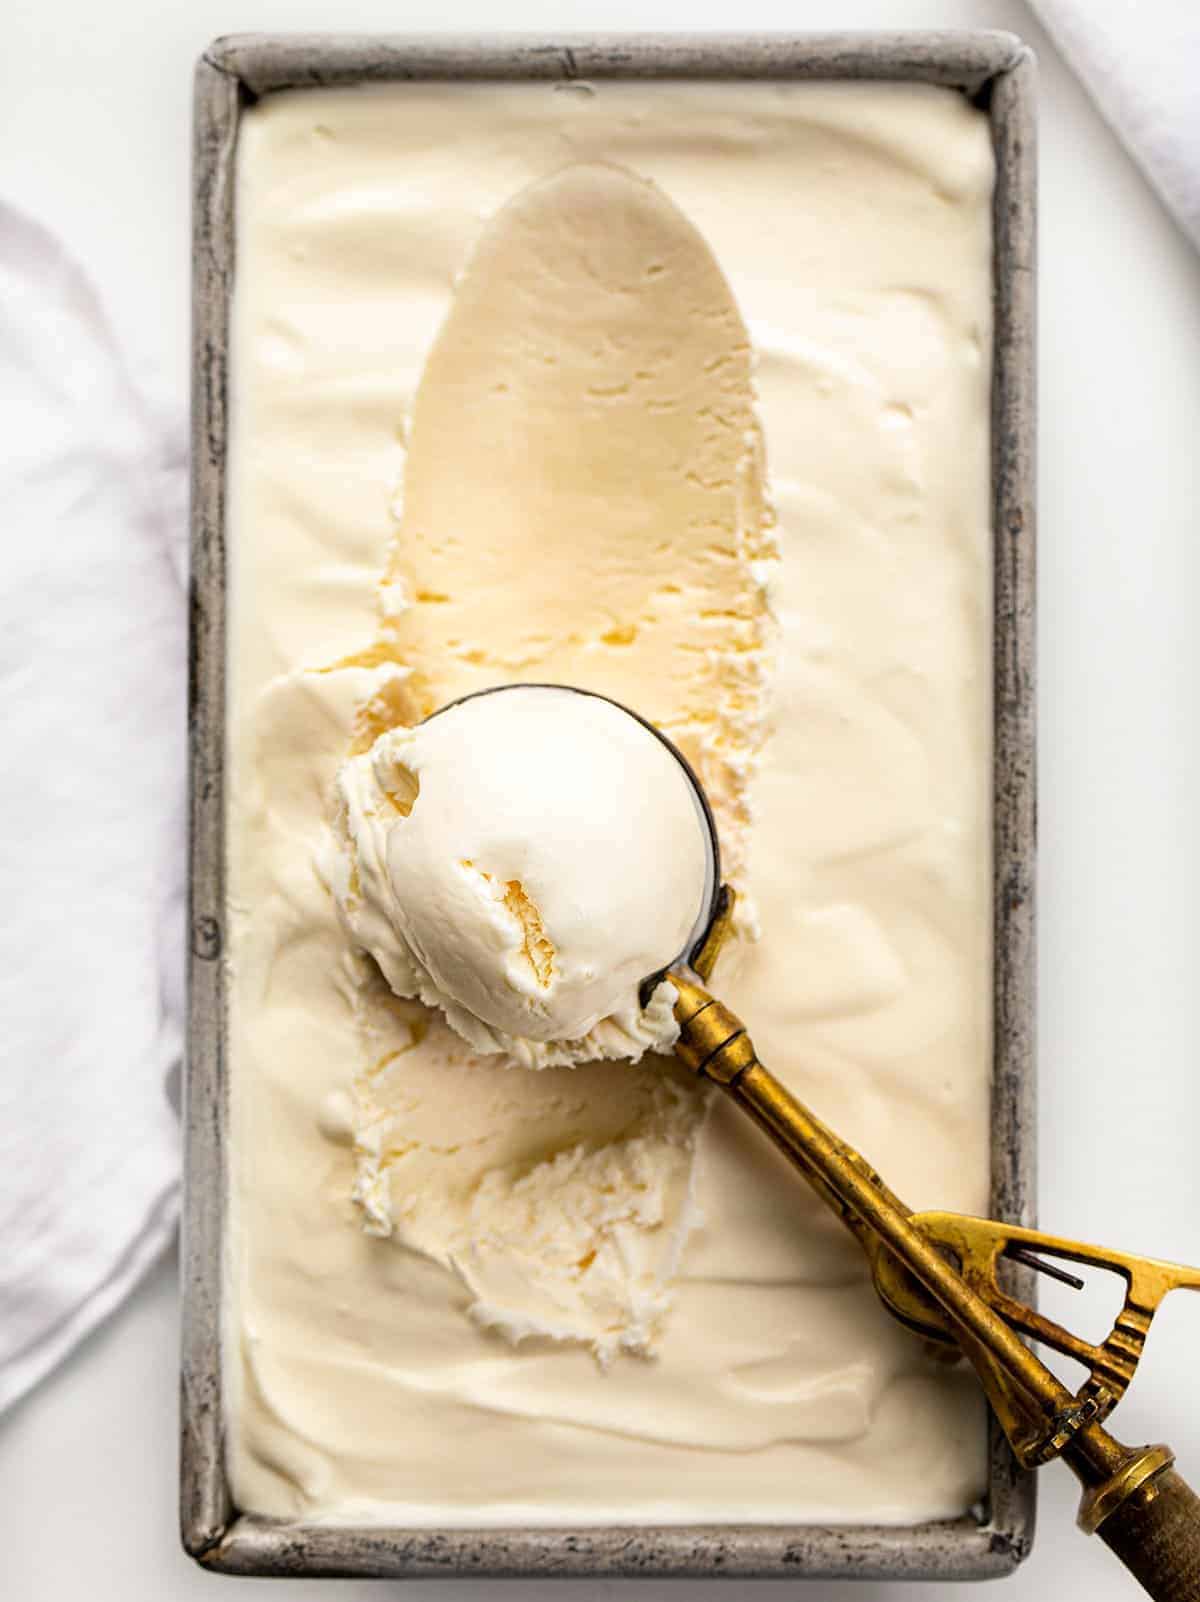 Ice Cream Scoop Filled with Ice Cream for No Churn Ice Cream Recipe - 4 Ingredient Ice Cream